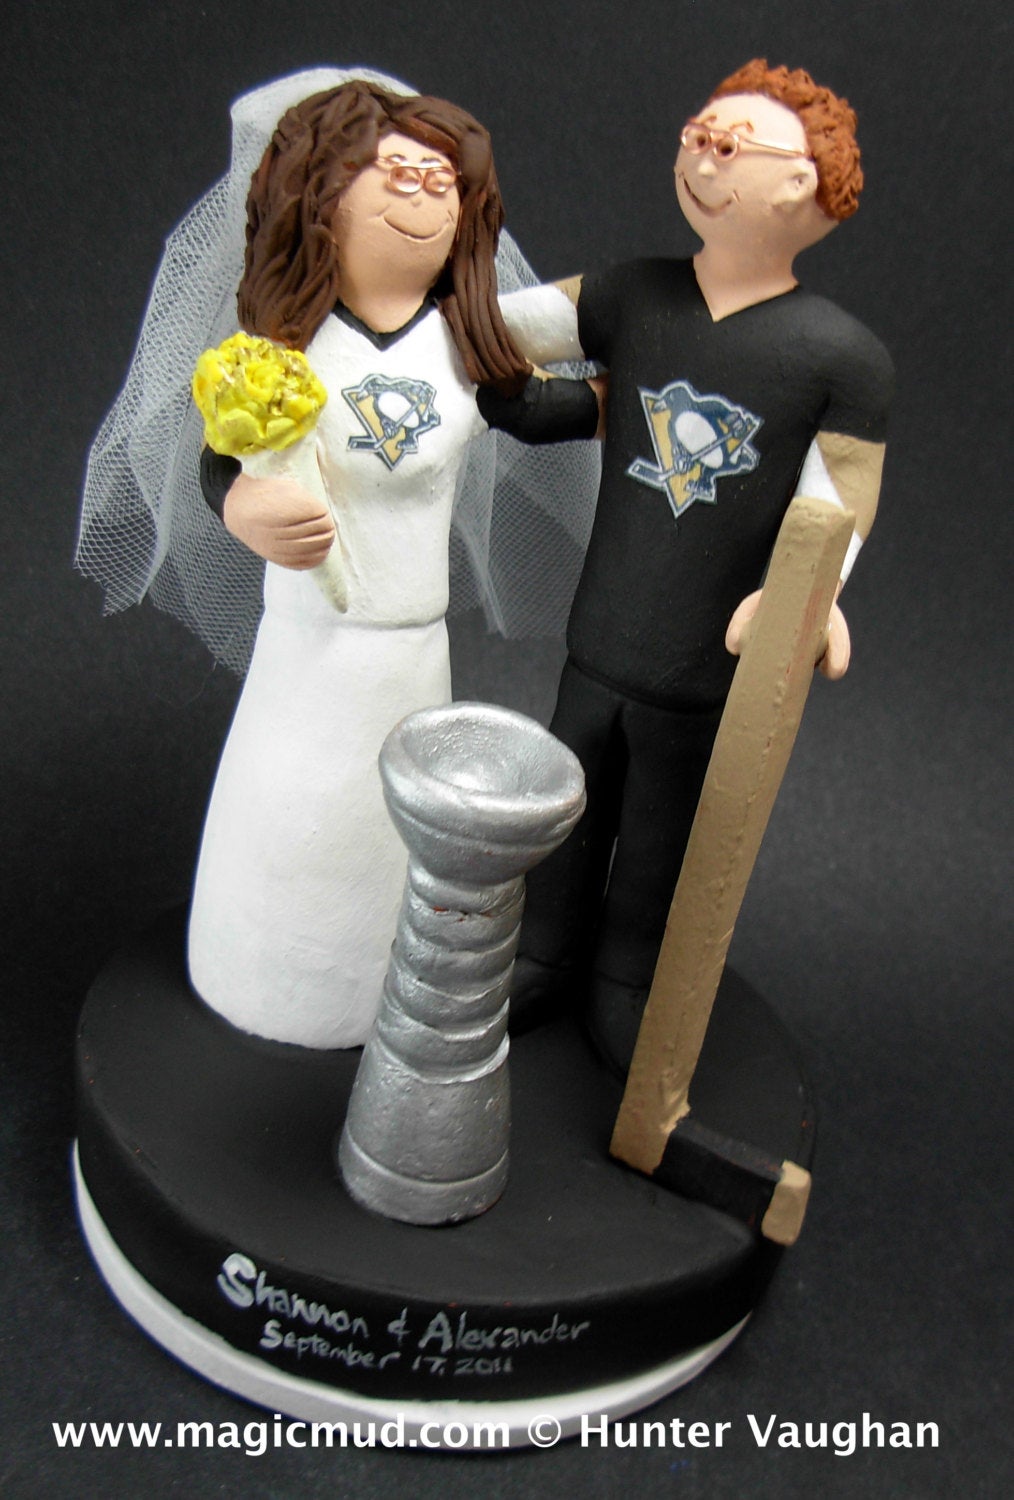 Pittsburgh Penguins Hockey Wedding Cake Topper, Pittsburgh Penguins Wedding Anniversary Gift, Wedding Statue for Hockey Bride and Groom - iWeddingCakeToppers